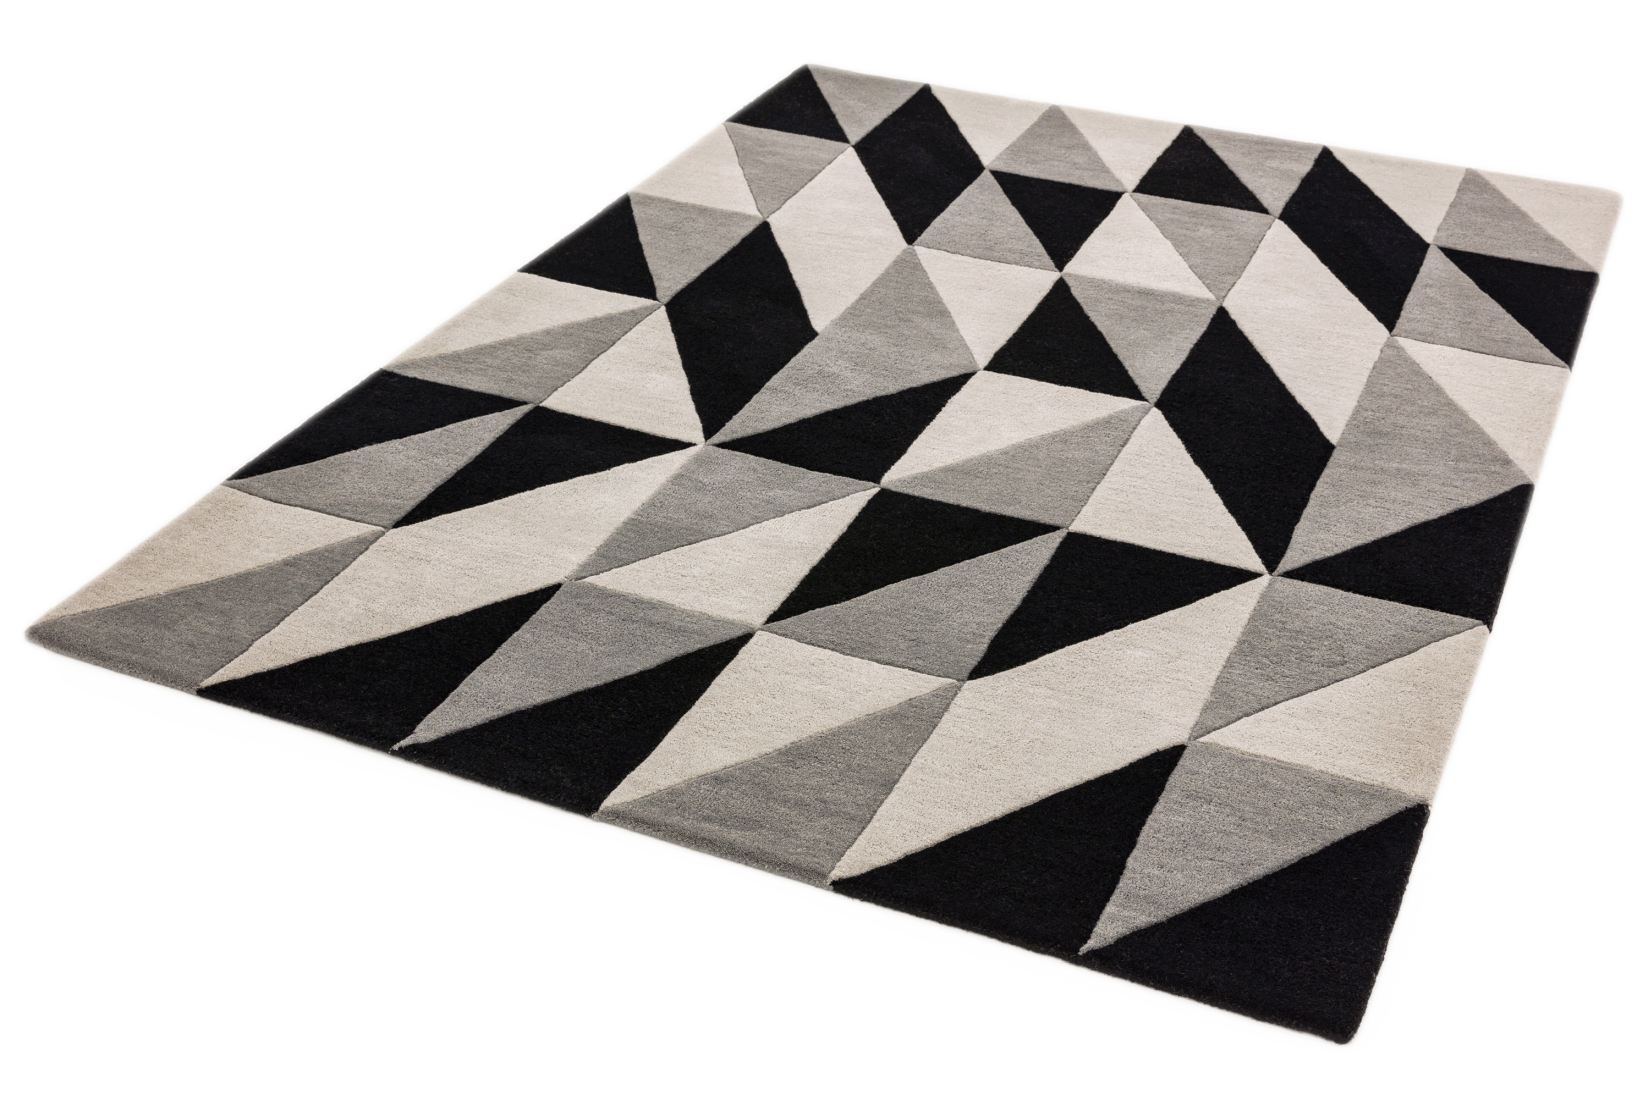 Reef Geometric Wool Rug - Flag Grey